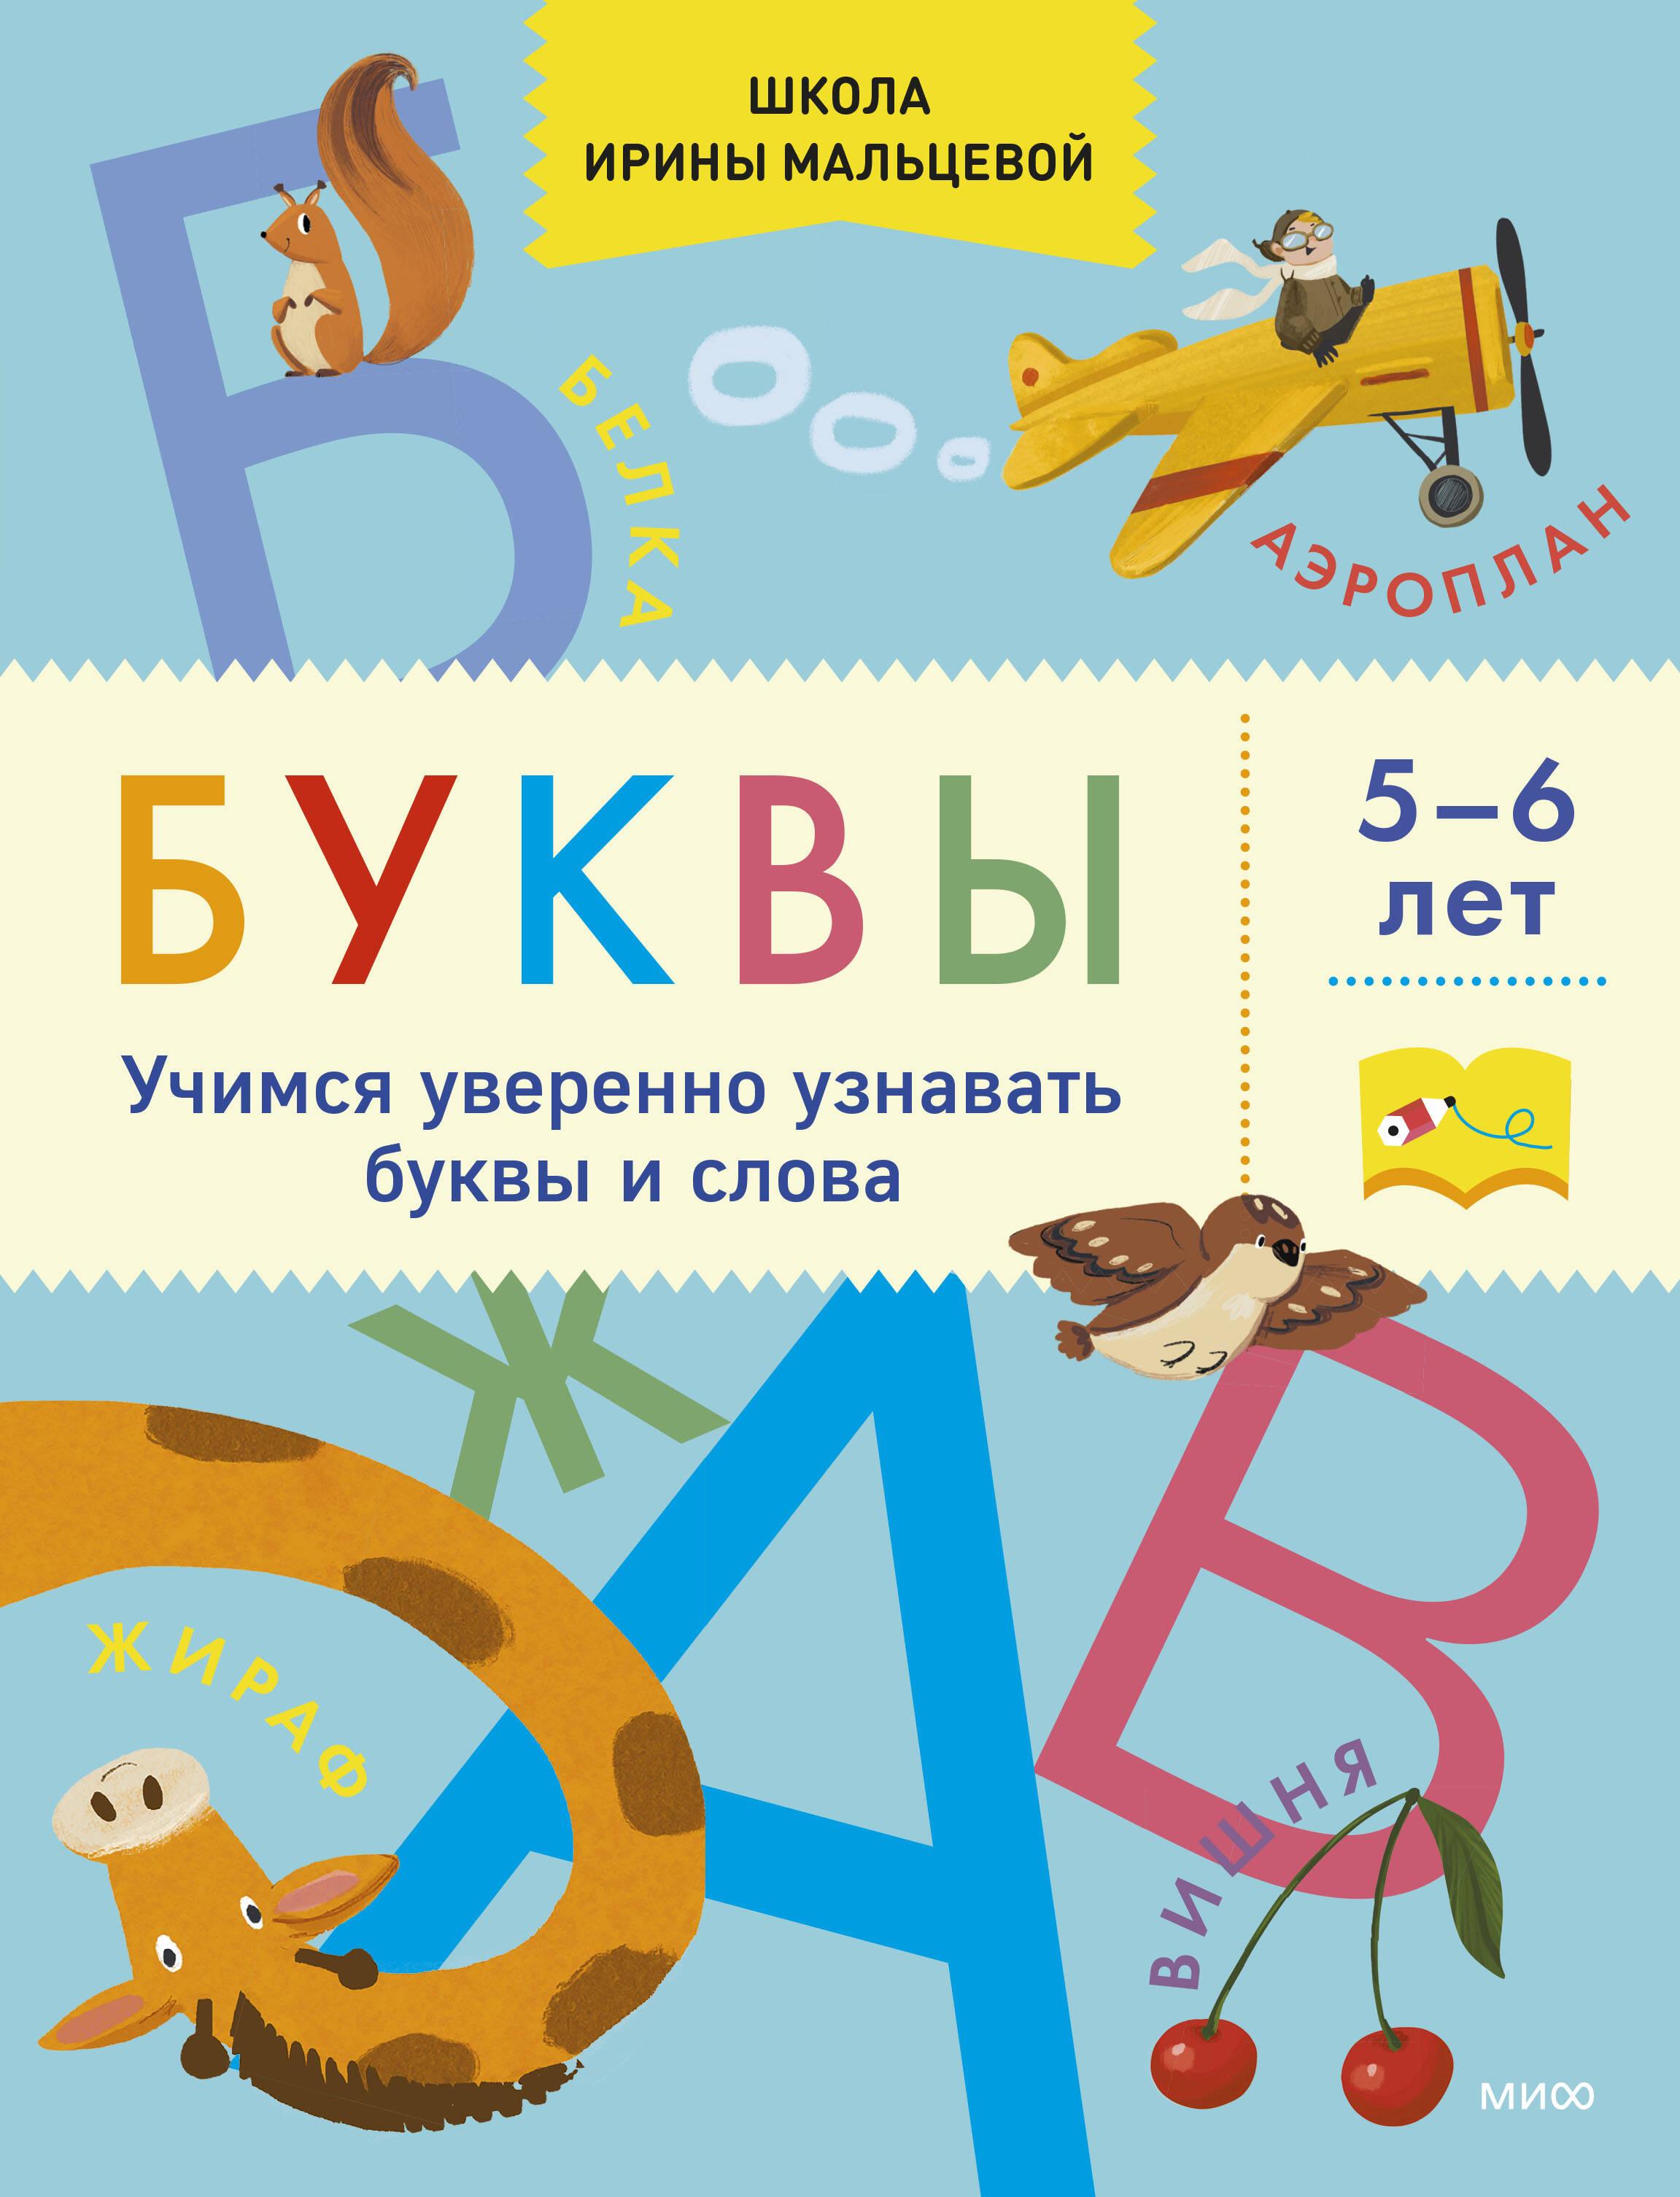 https://cdn.book24.ru/v2/MIF00035026/COVER/cover13d.jpg